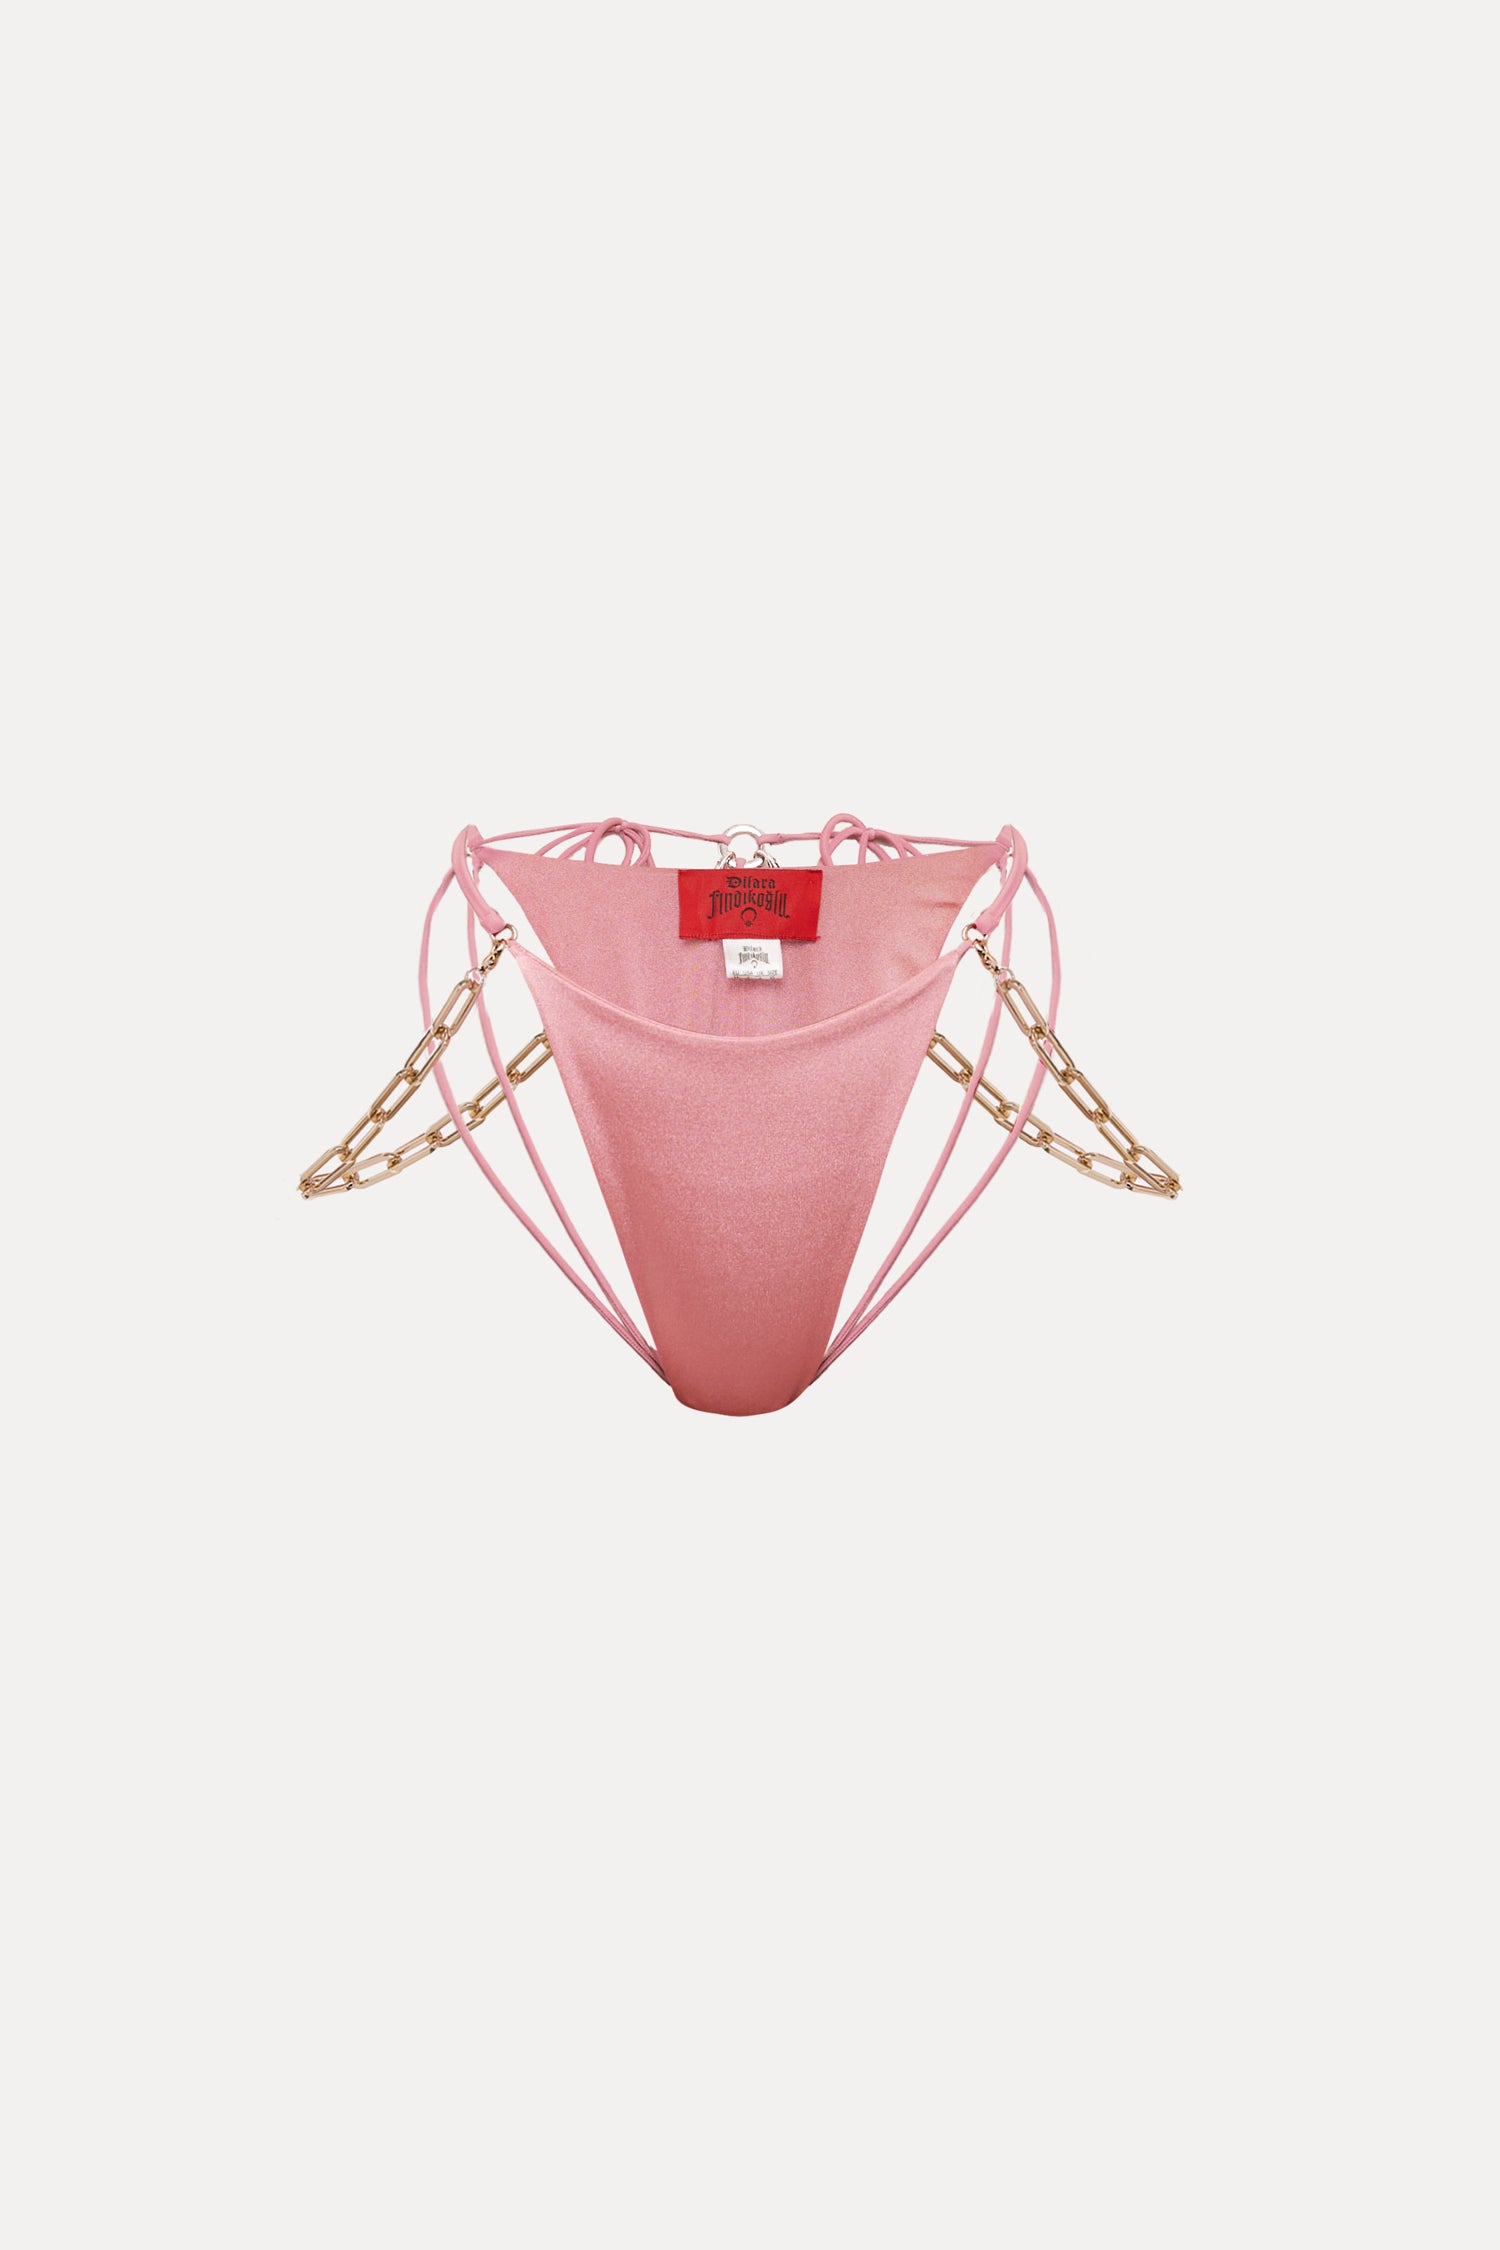 Belly Dancer Bikini Bottom - Pink